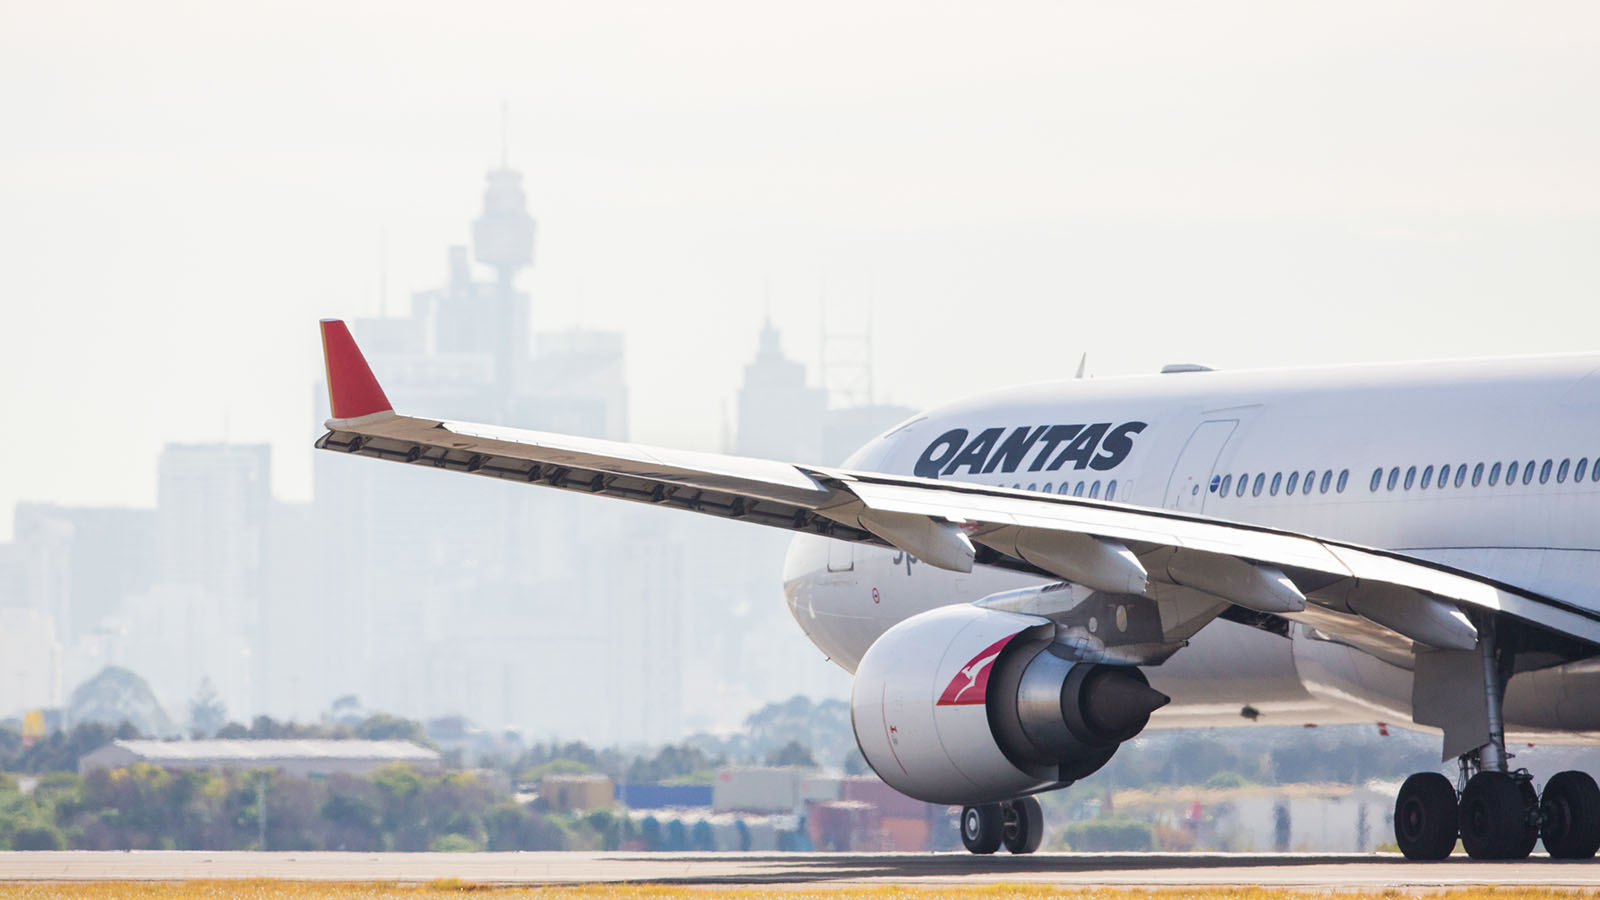 Qantas A330 at Sydney Airport